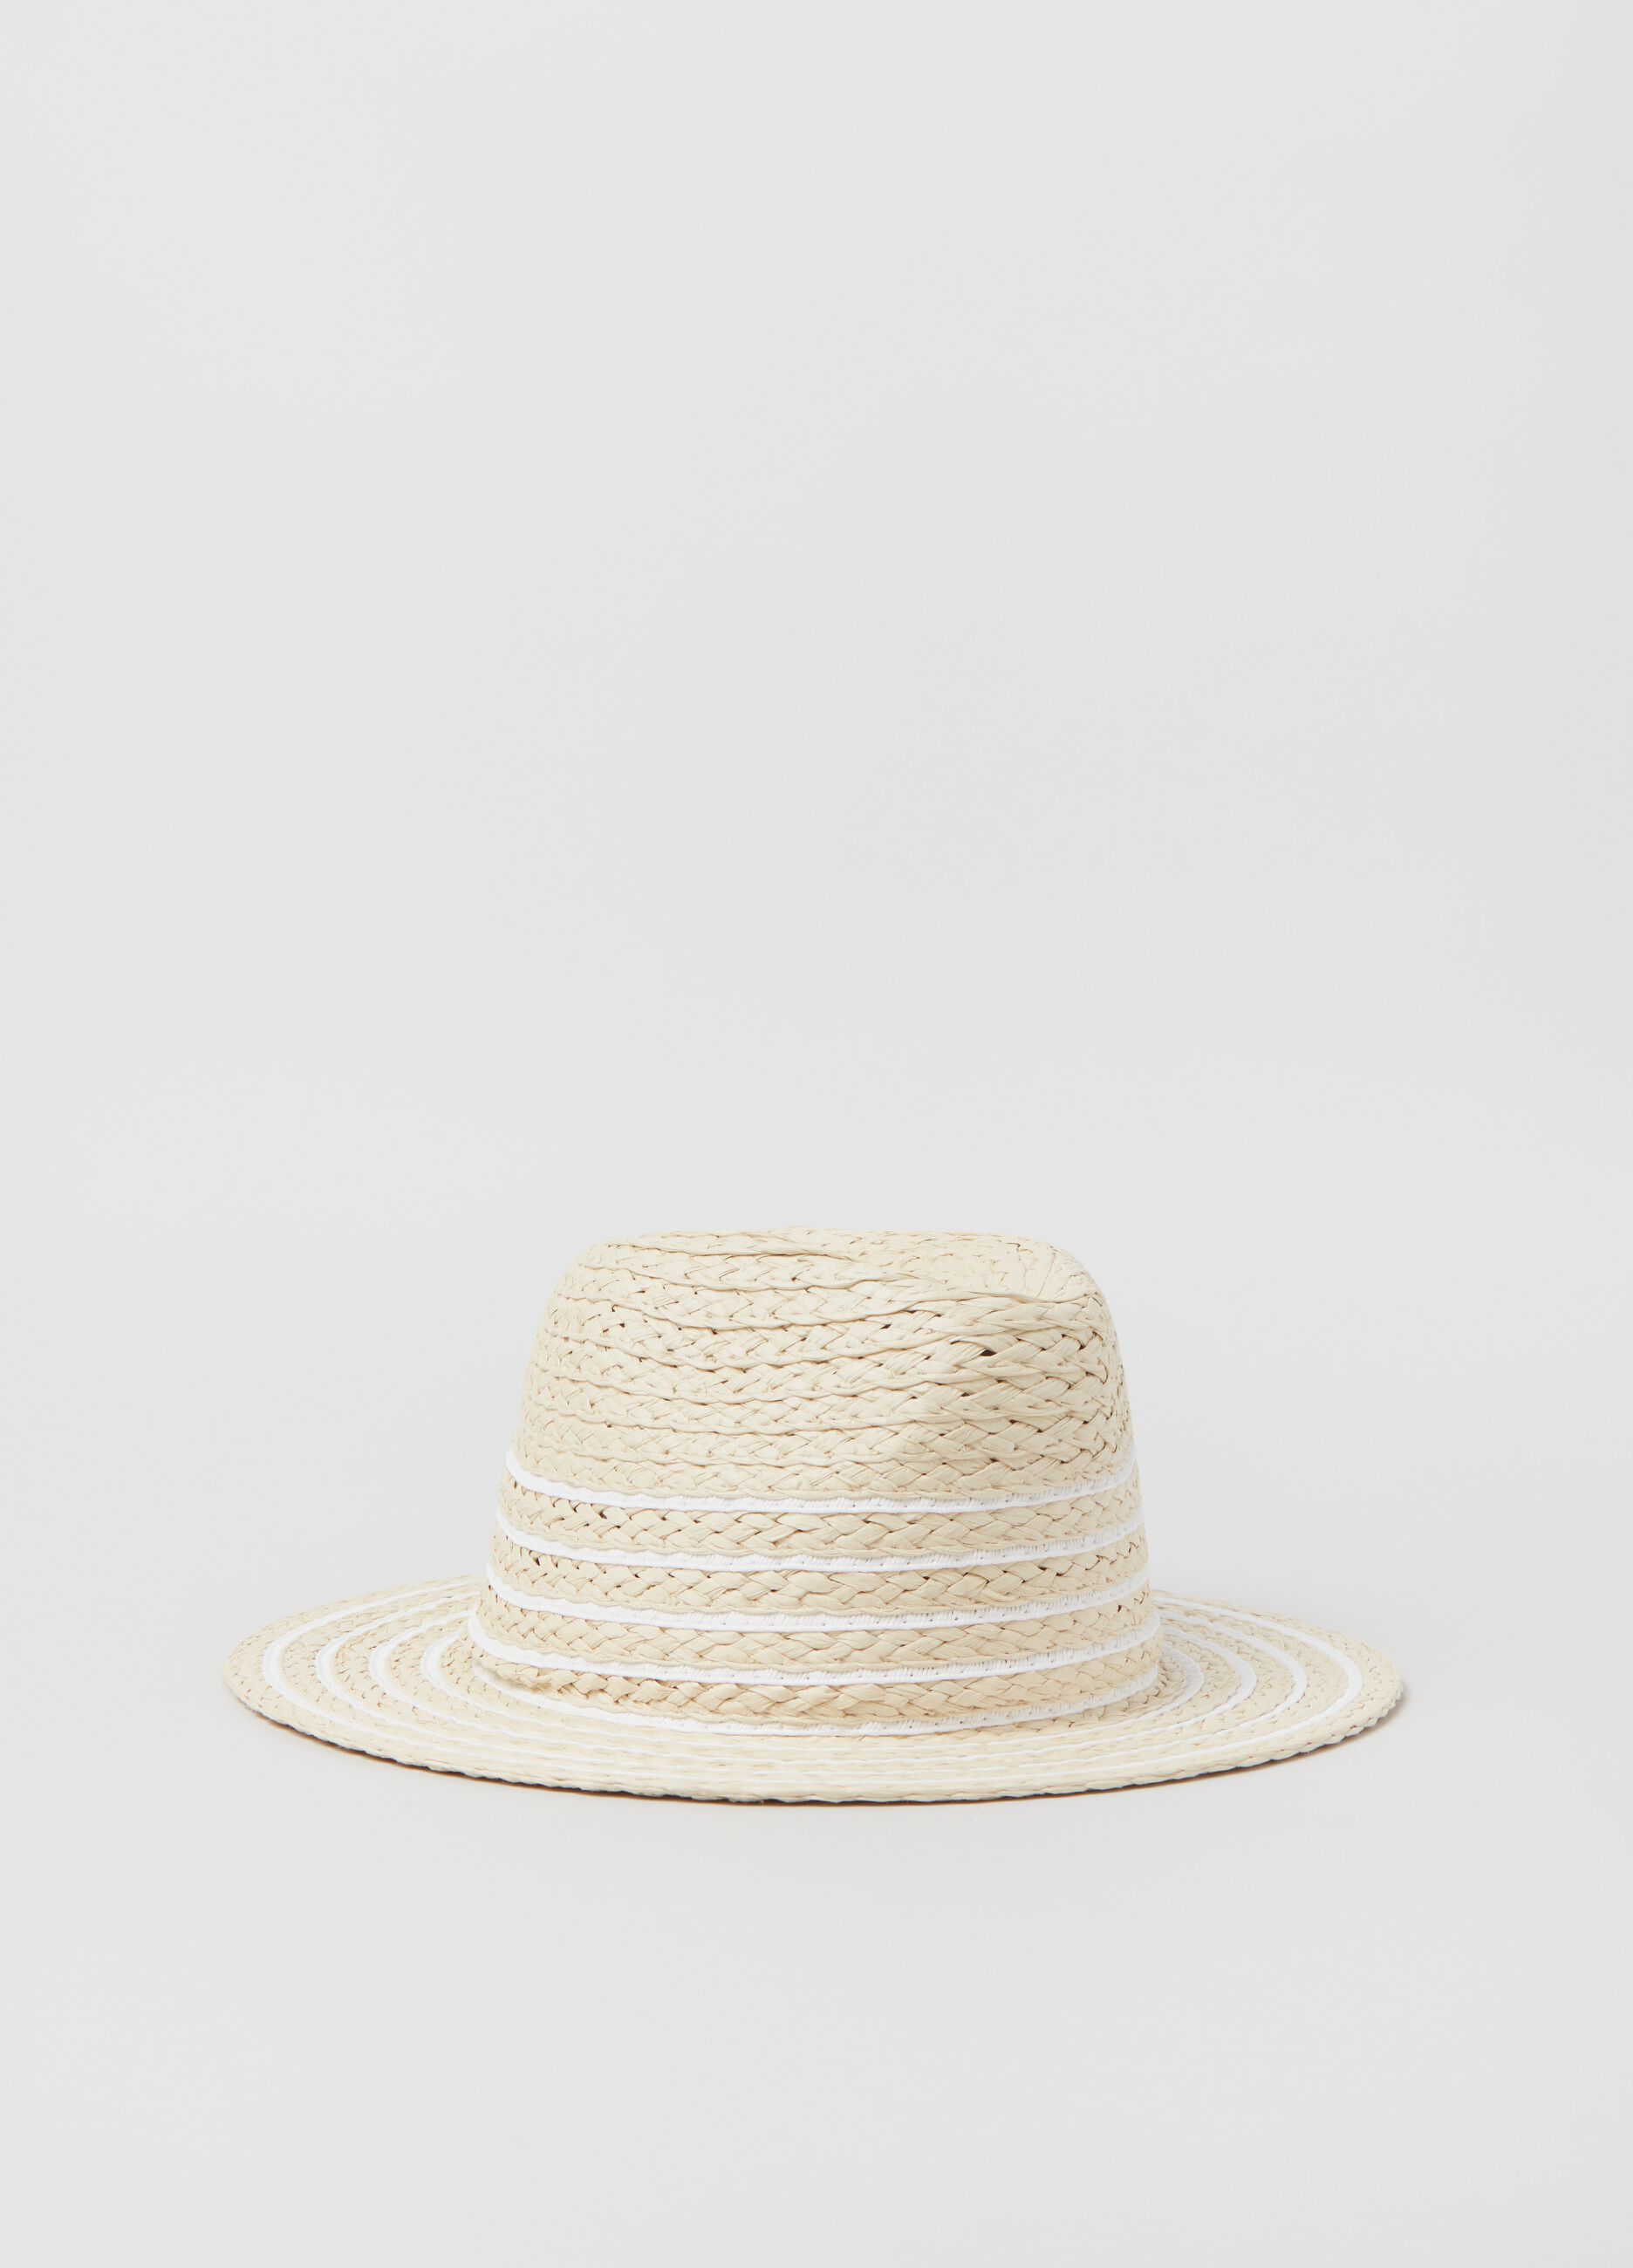 Raffia hat with stripes